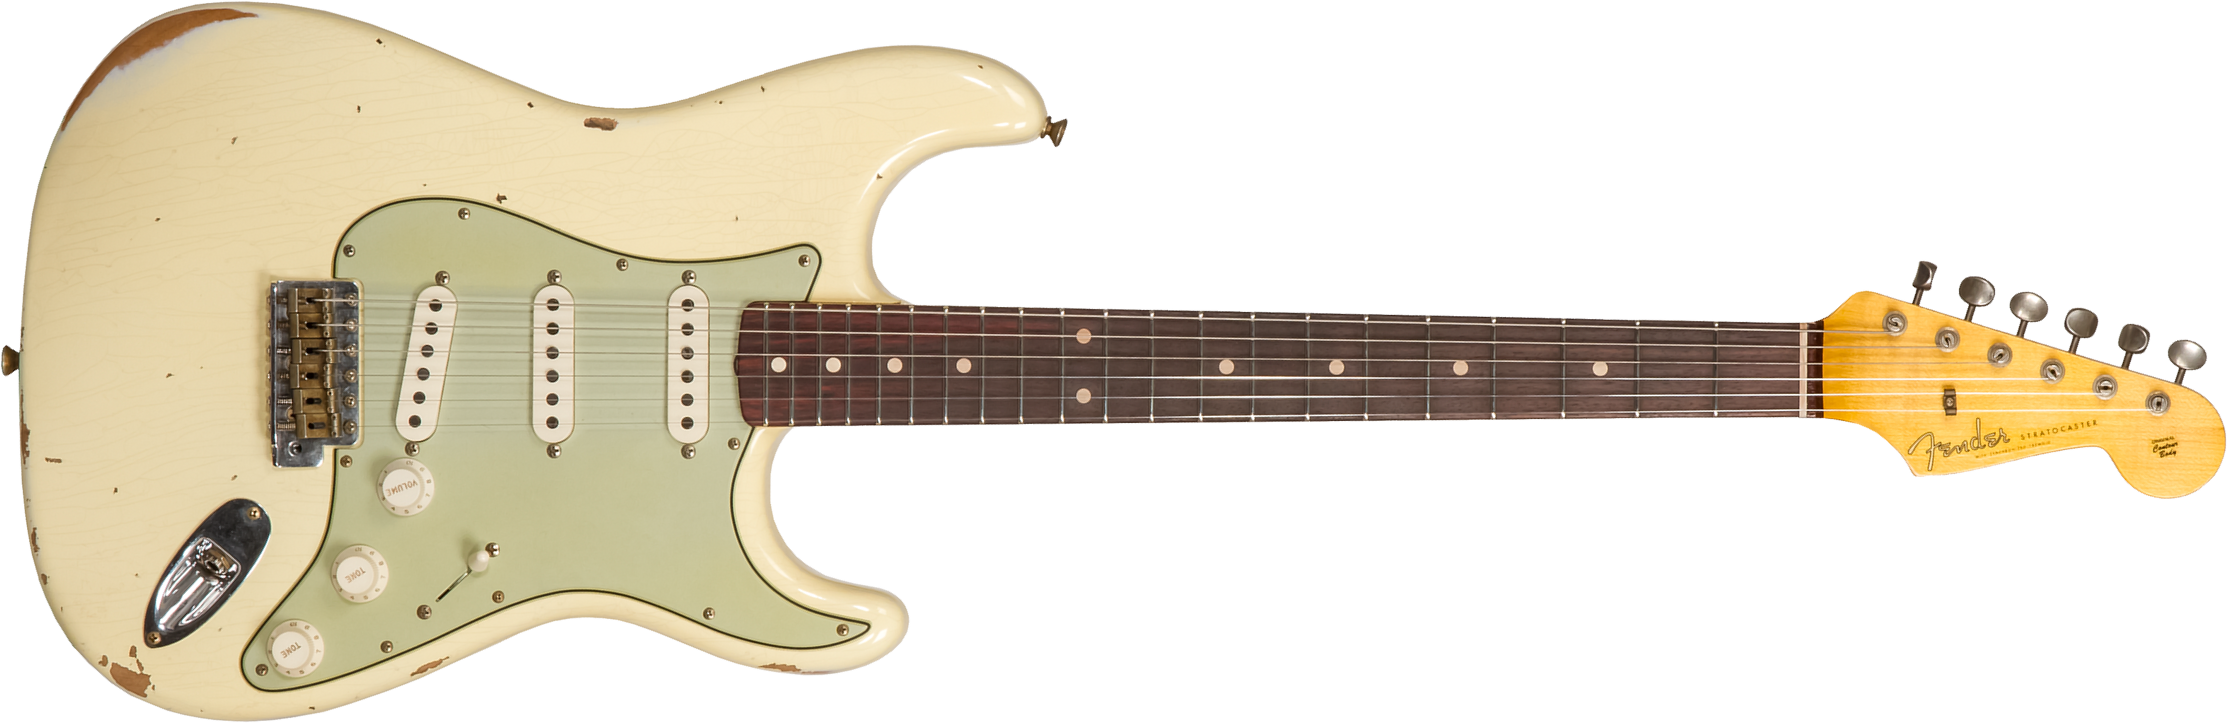 Fender Custom Shop Strat 1959 3s Trem Rw #r117393 - Relic Aged Vintage White - Str shape electric guitar - Main picture